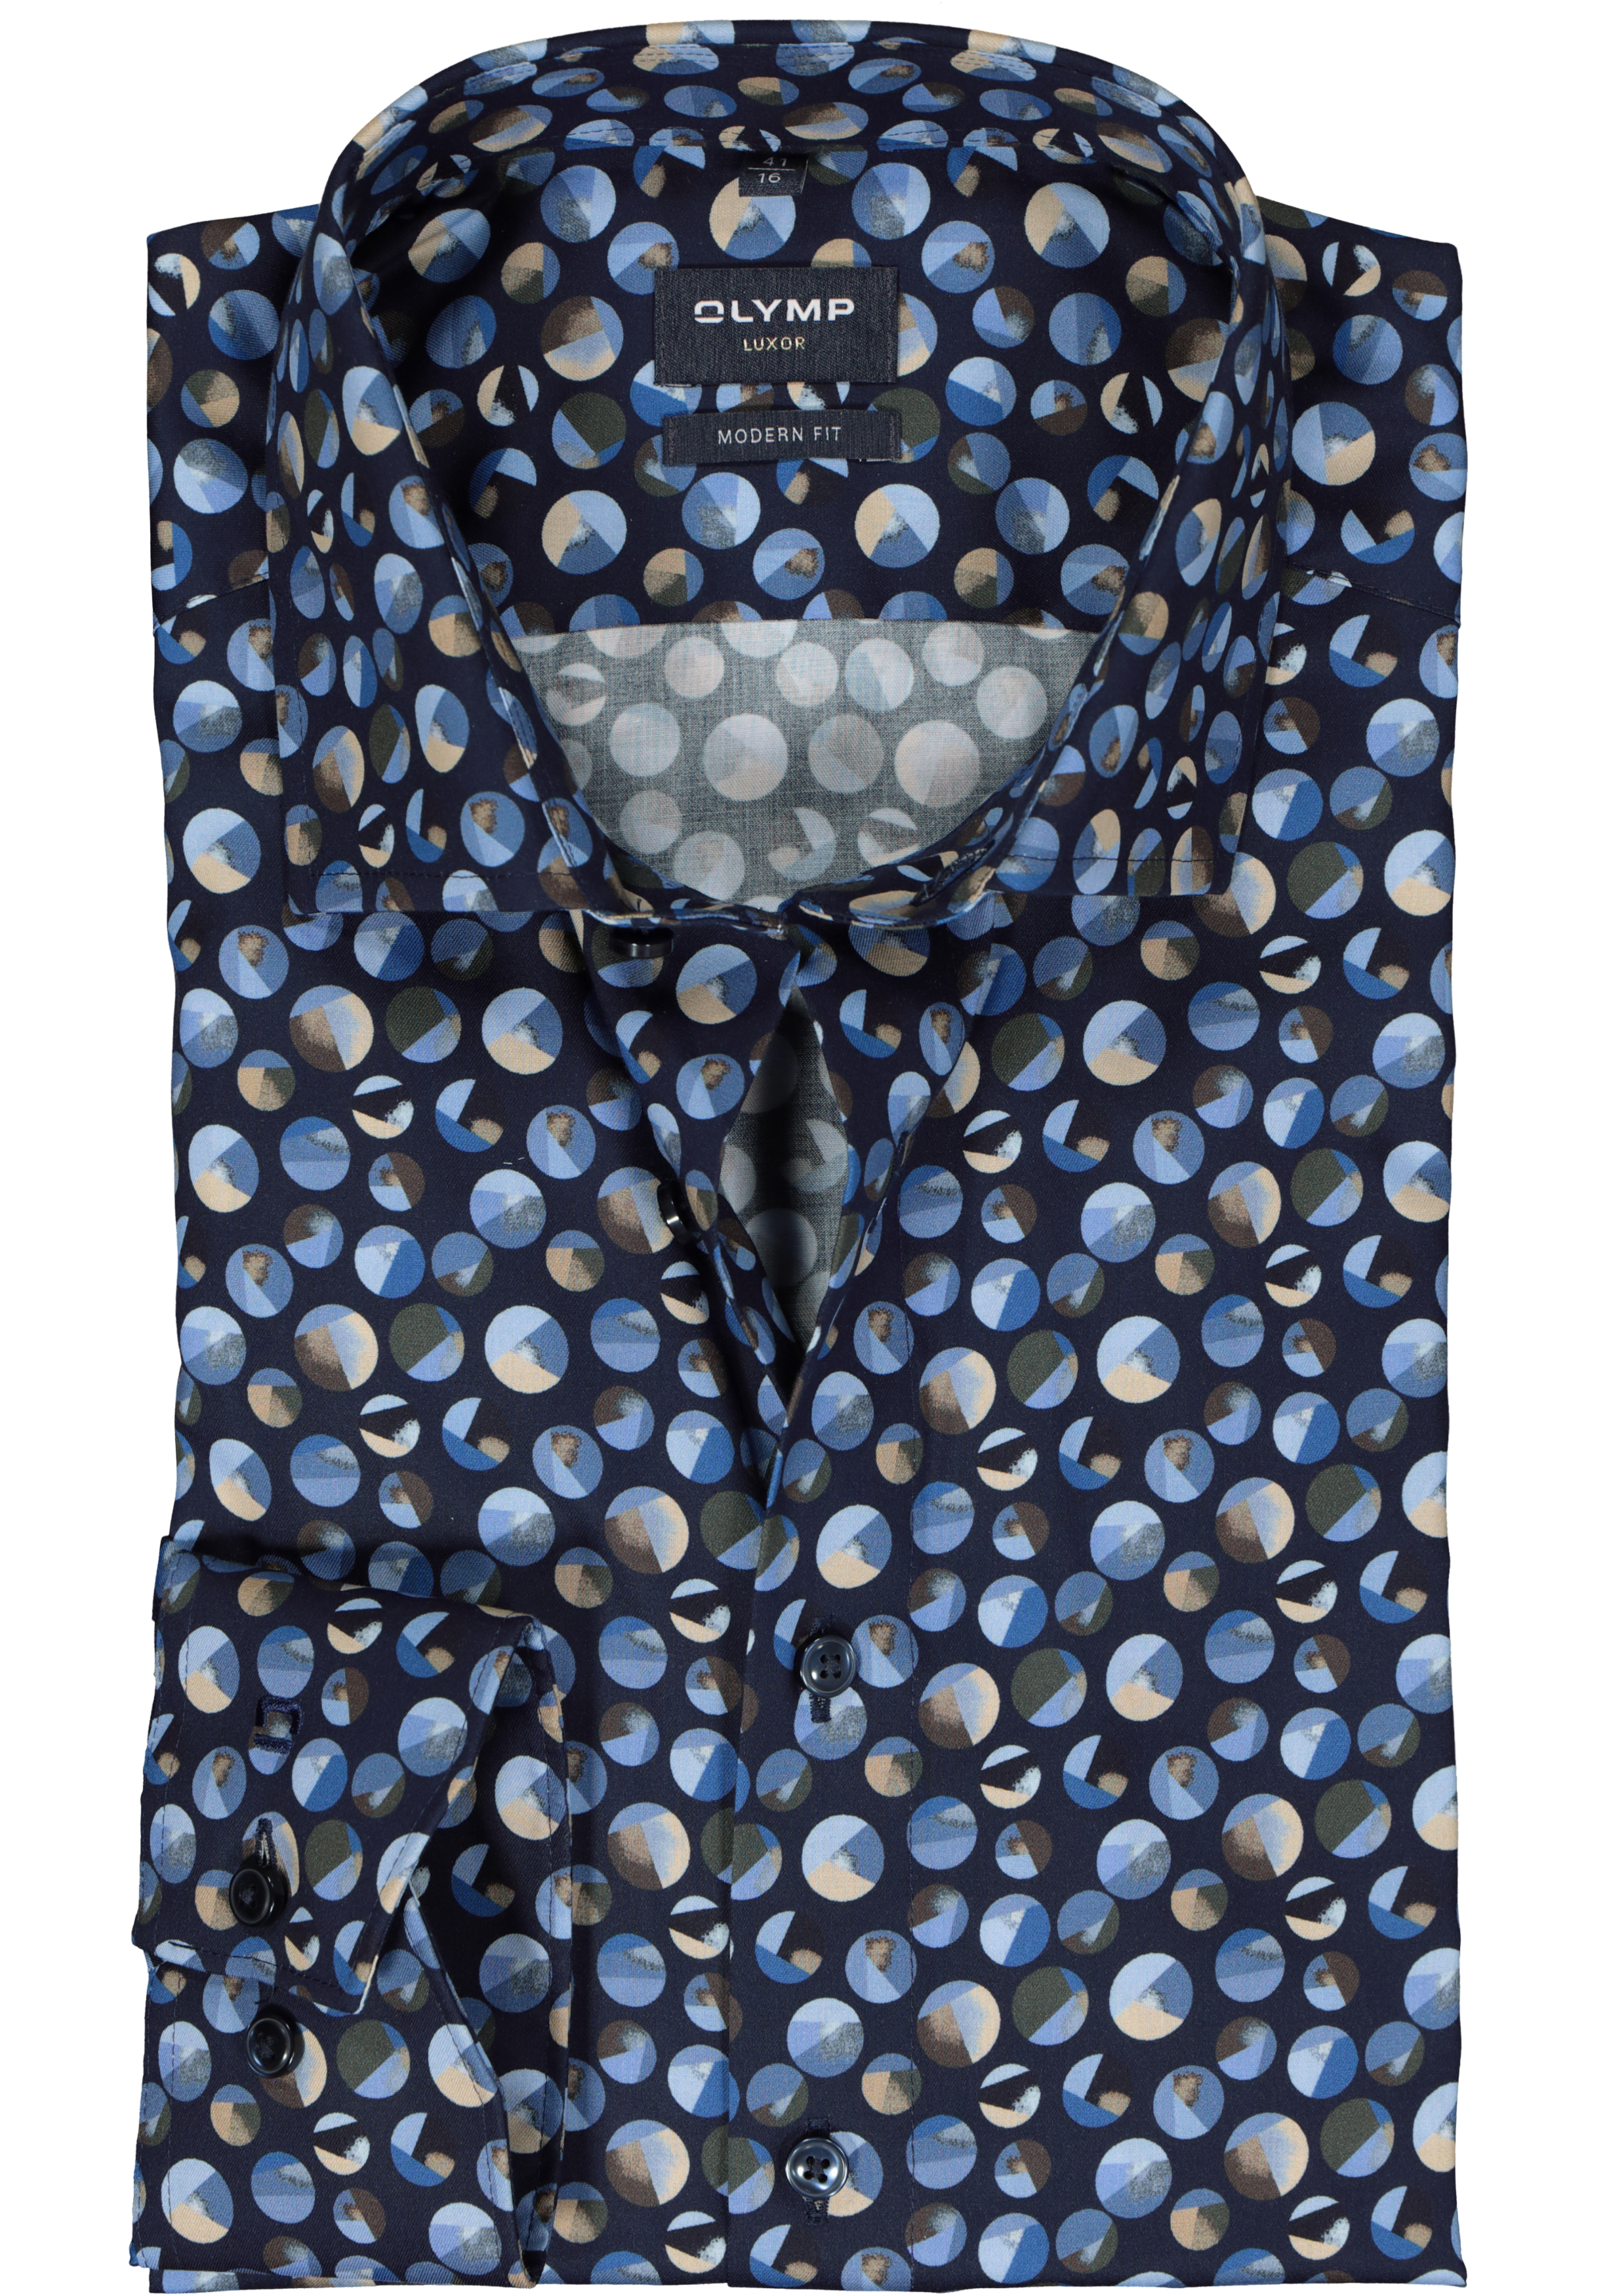 OLYMP modern fit overhemd, mouwlengte 7, mouwlengte 7, satijnbinding, blauw met bruin dessin